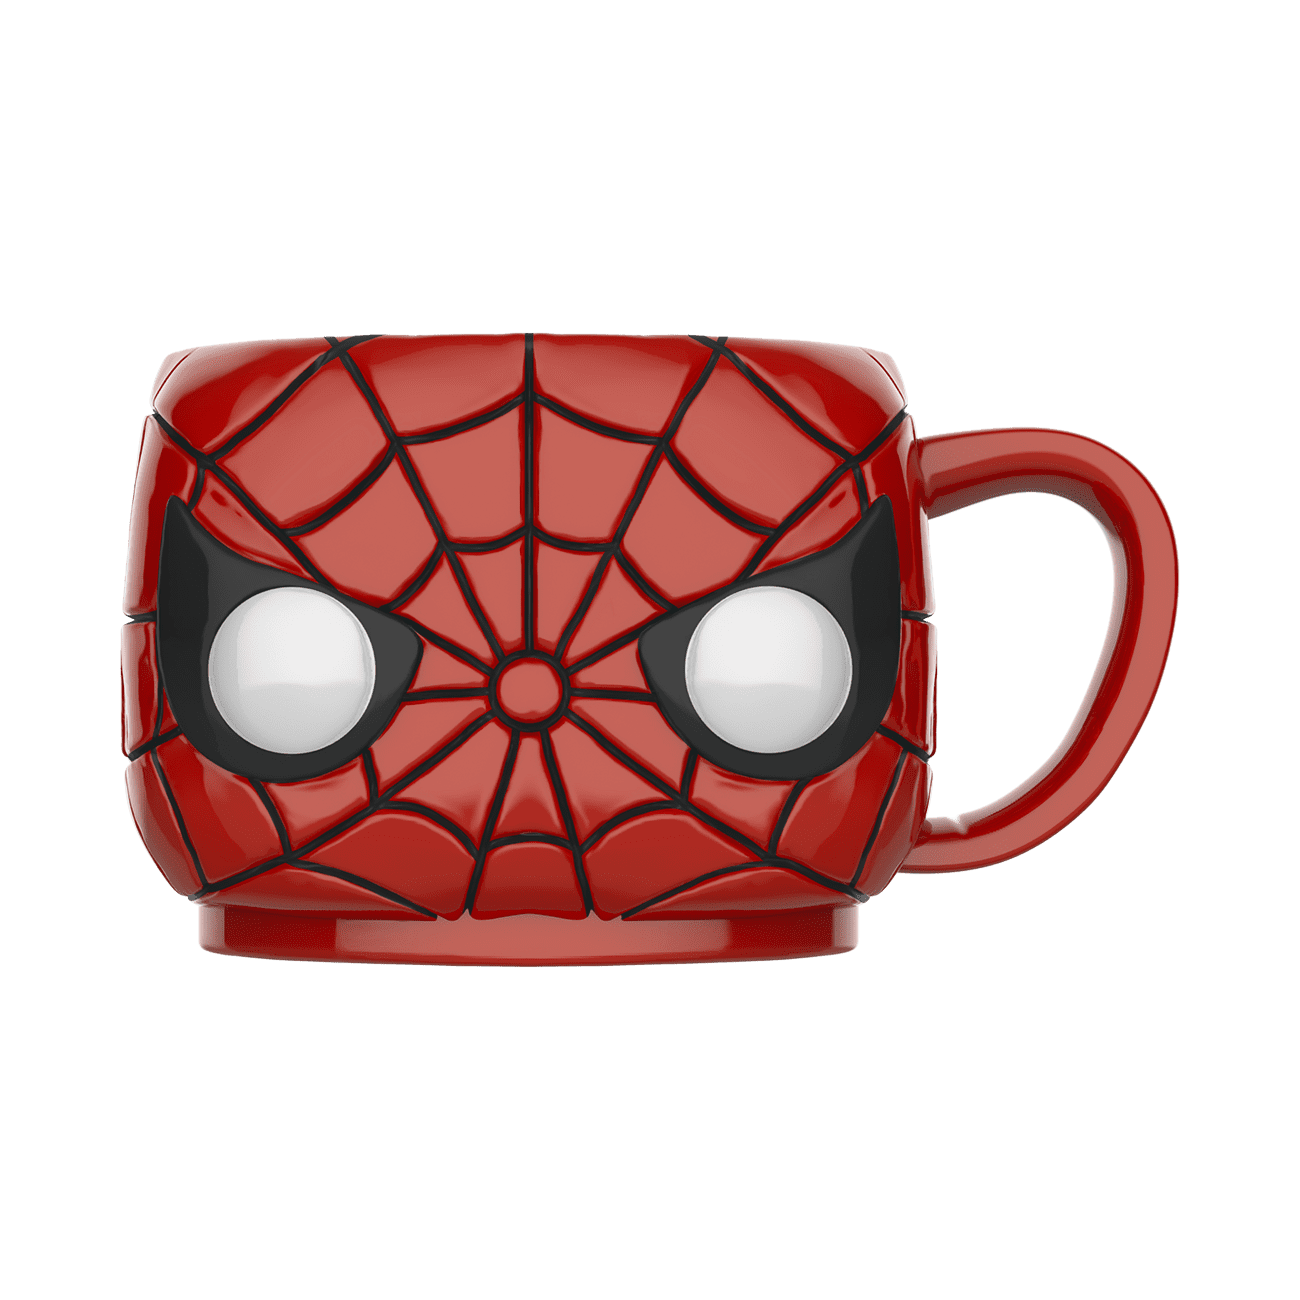 Funko Pop! Mug: Marvel - Spider-Man Ceramic Mug 16oz, Red, Black 